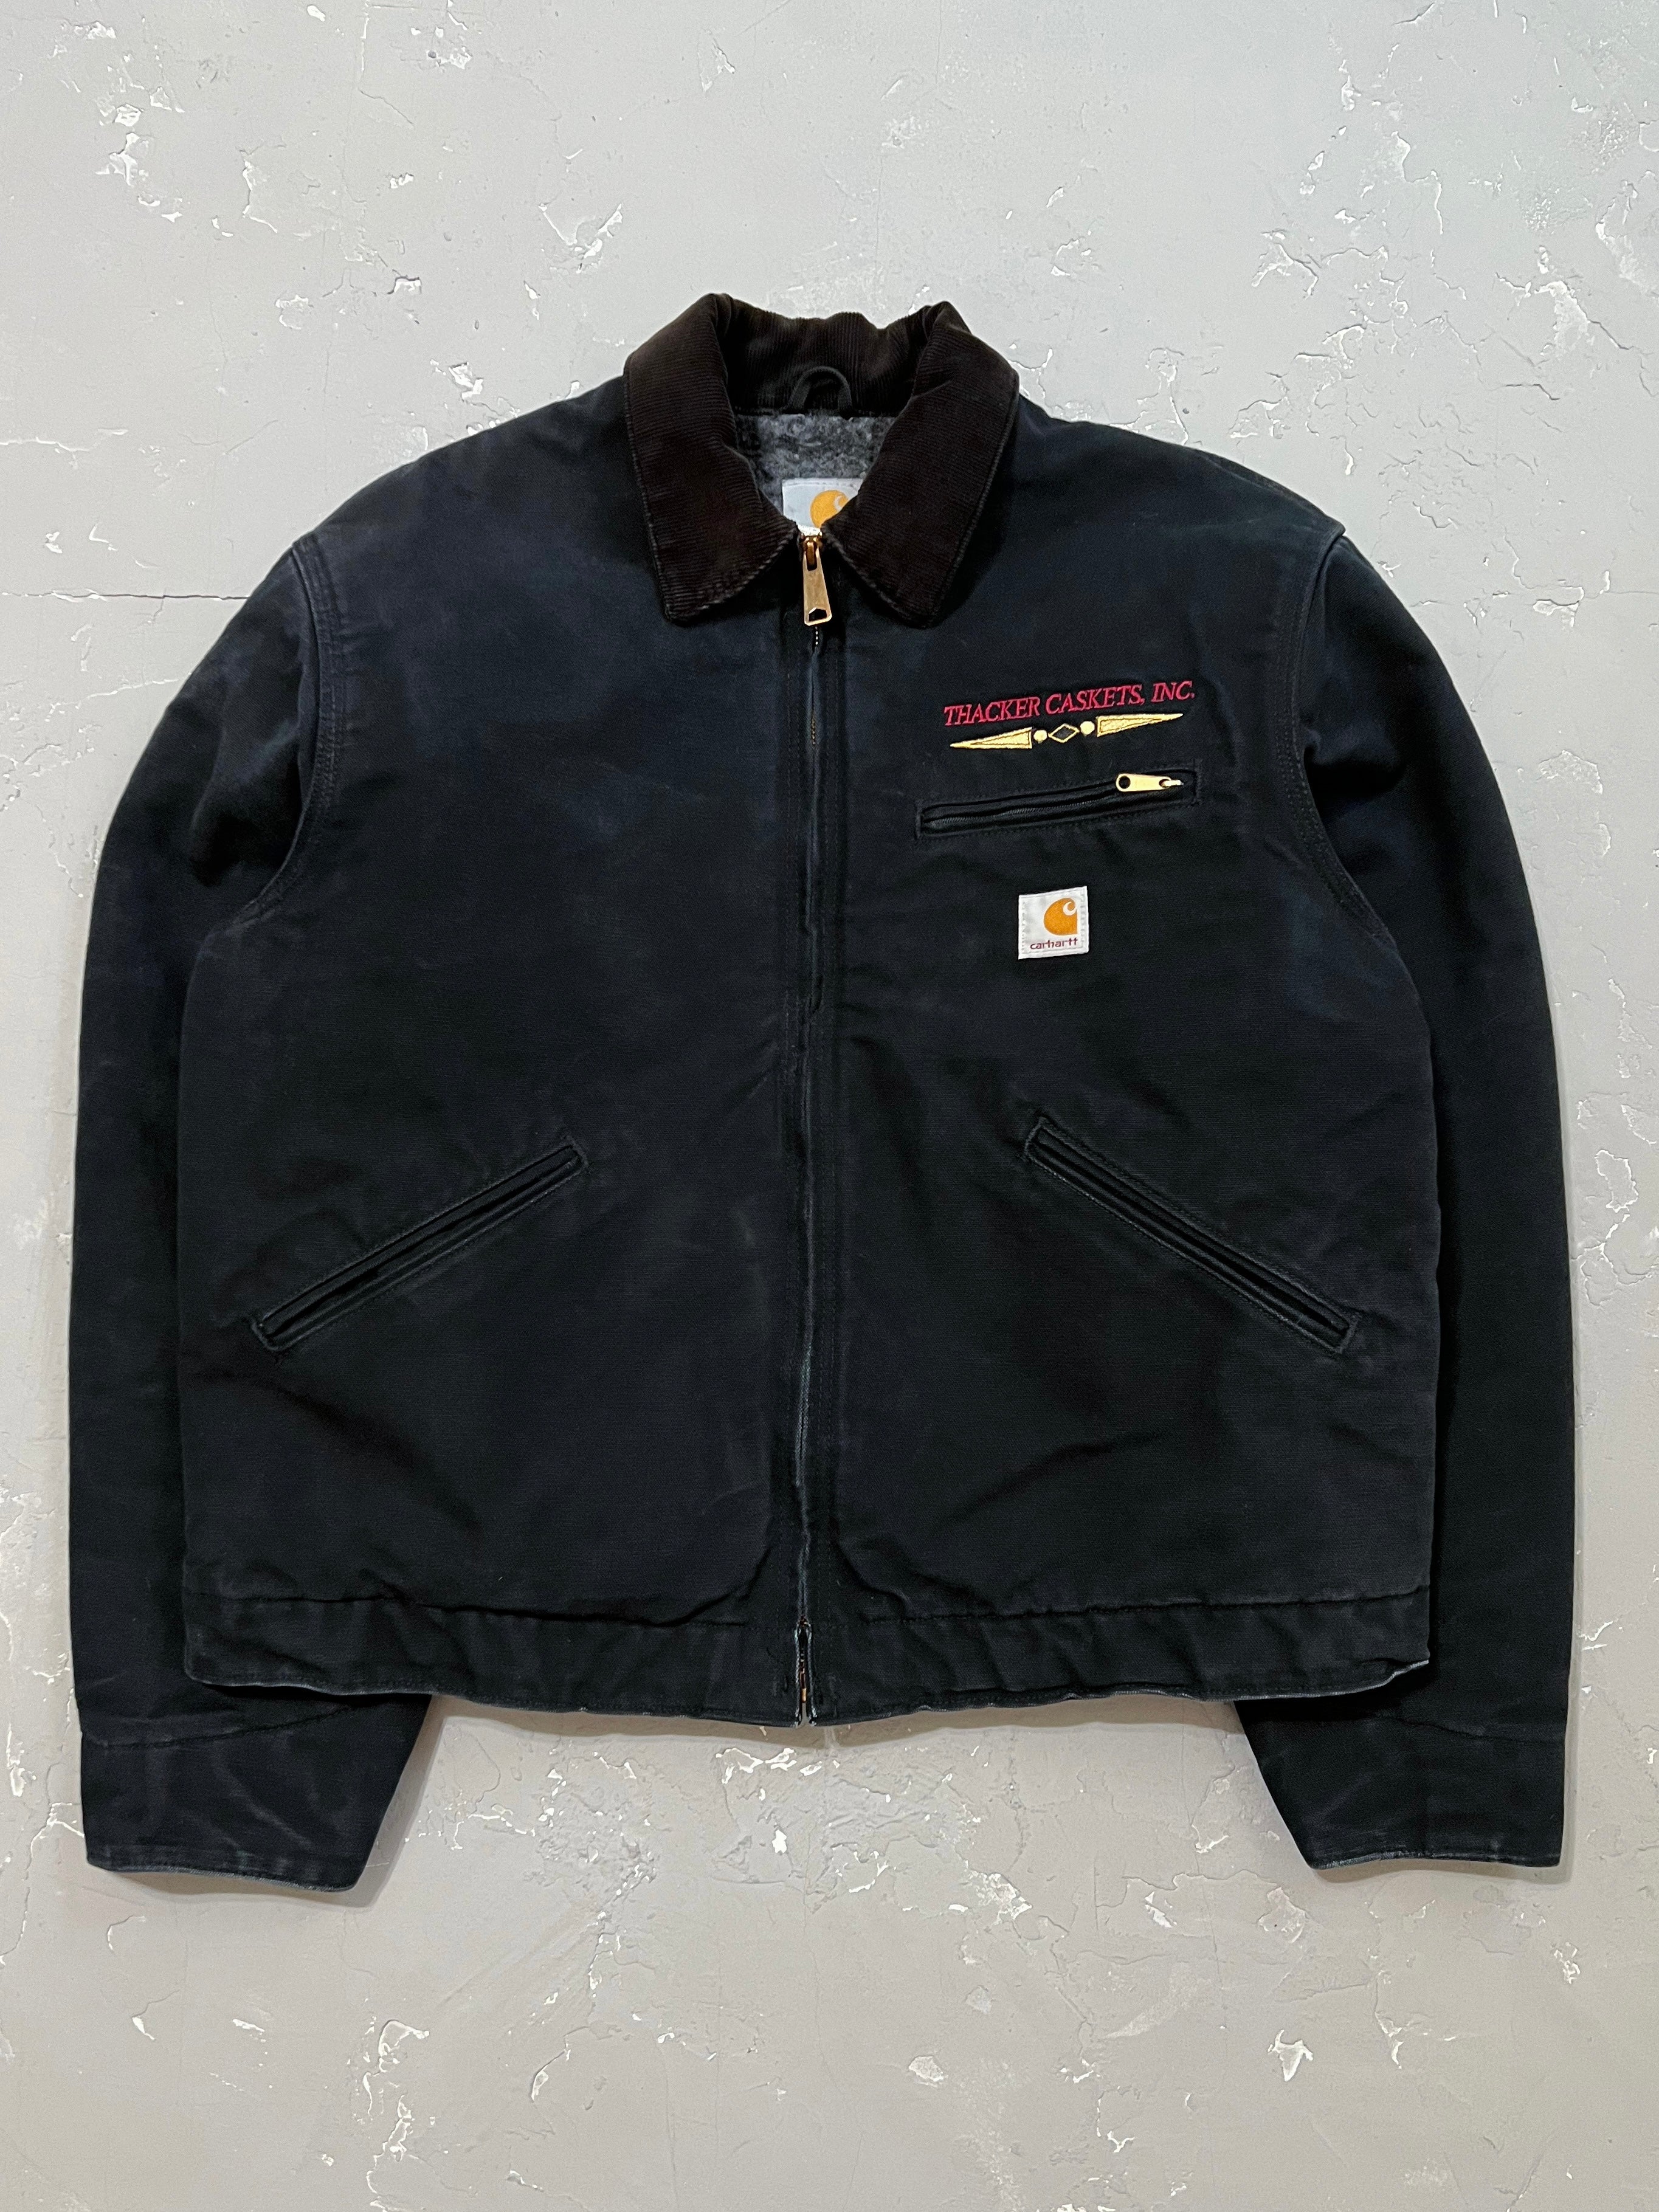 1990s Carhartt “Thacker Caskets” Black Detroit Jacket [L]